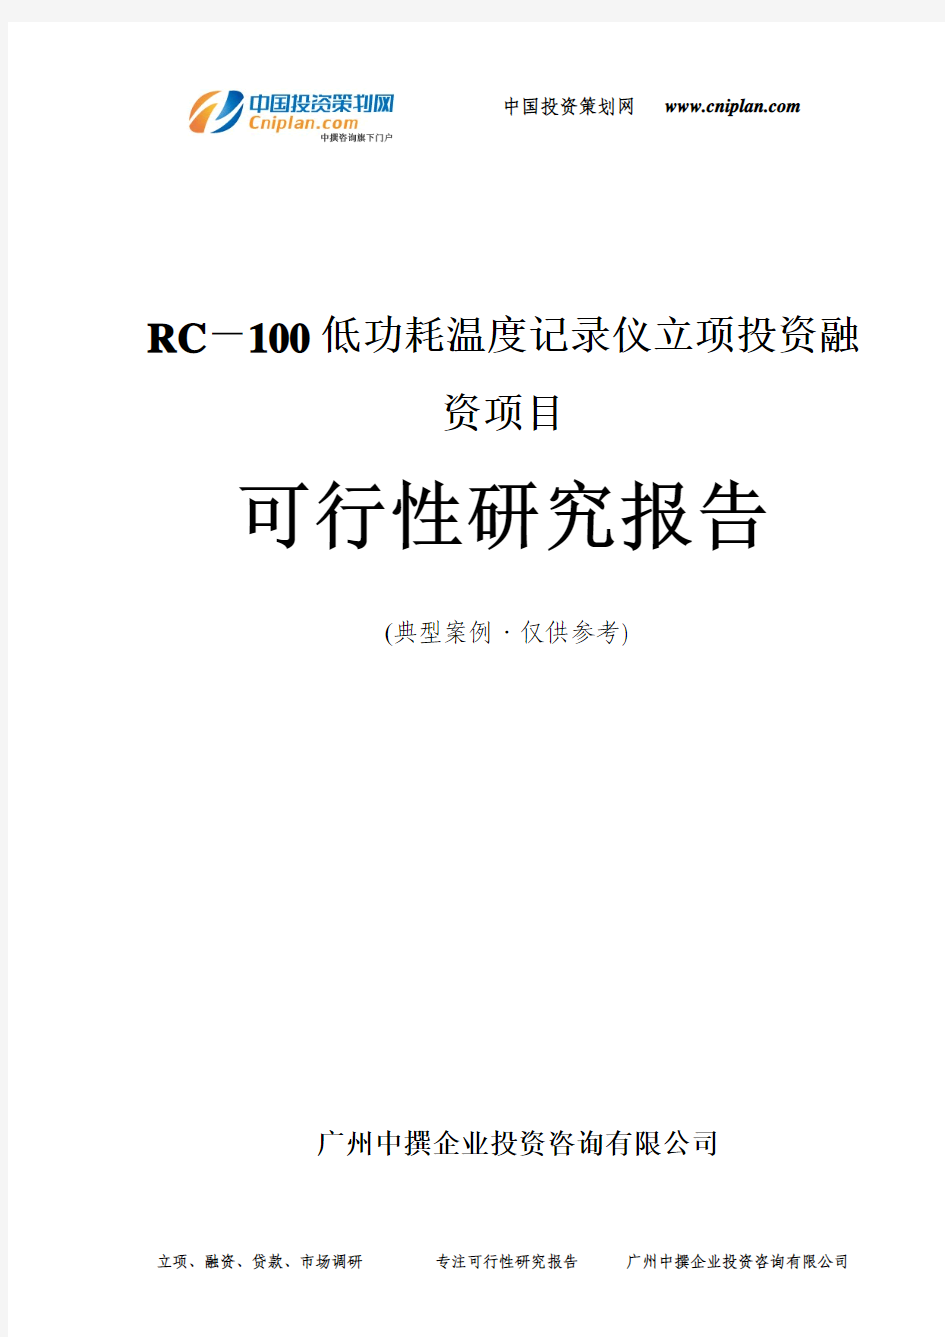 RC-100低功耗温度记录仪融资投资立项项目可行性研究报告(中撰咨询)